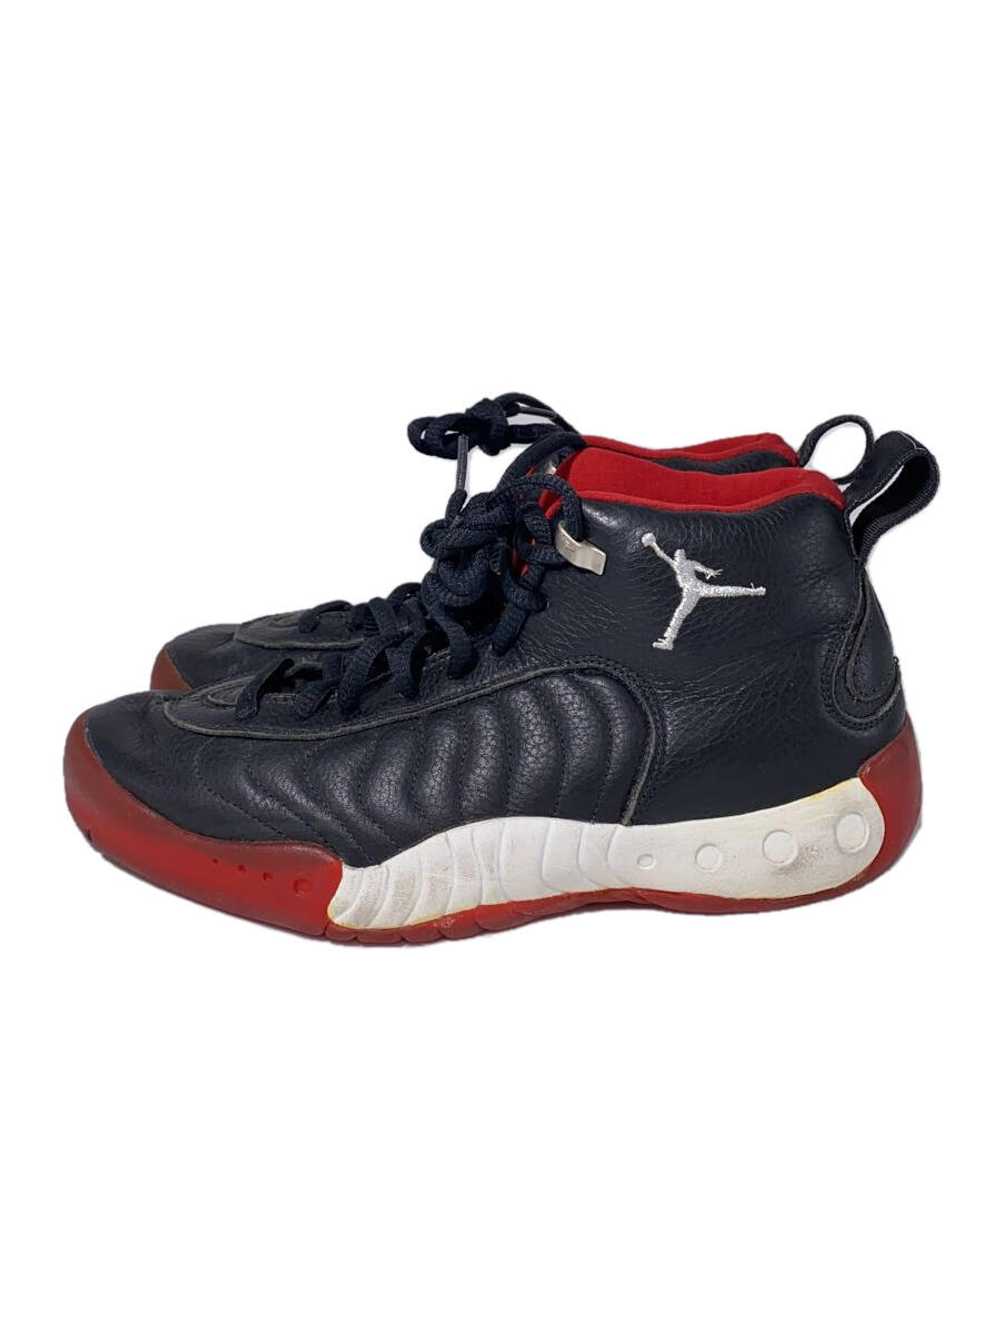 Nike High Cut Sneakers/Blk Shoes US10 J7J11 - image 1